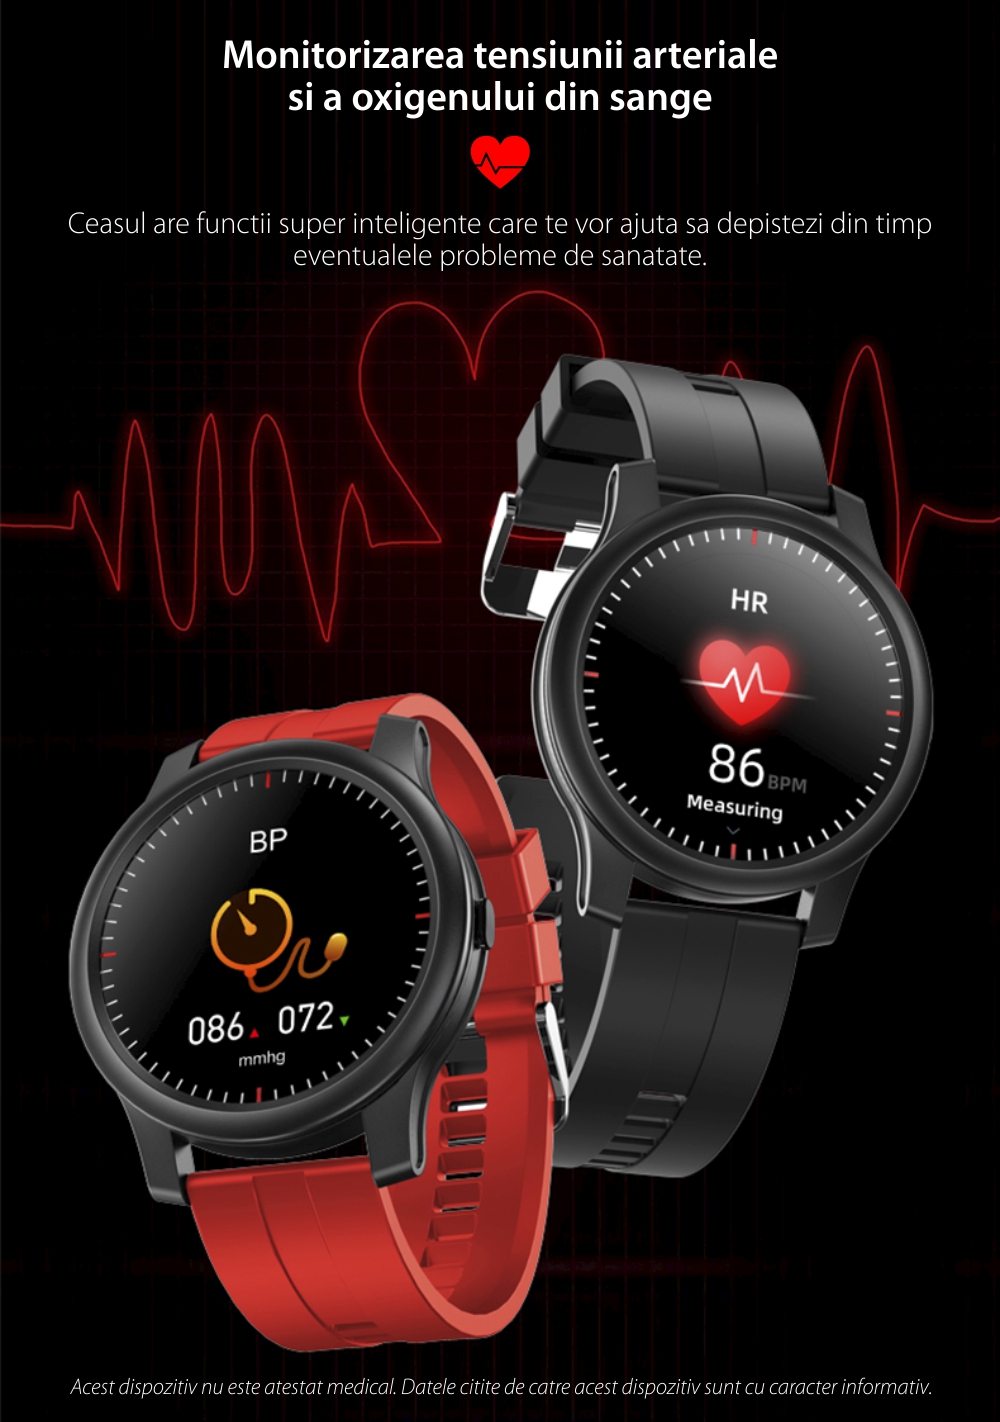 Ceas Smartwatch XK Fitness F12S cu Monitorizare Puls, Tensiune, Oxigen, Somn, Memento sedentar, Moduri sportive, Calorii, Maro